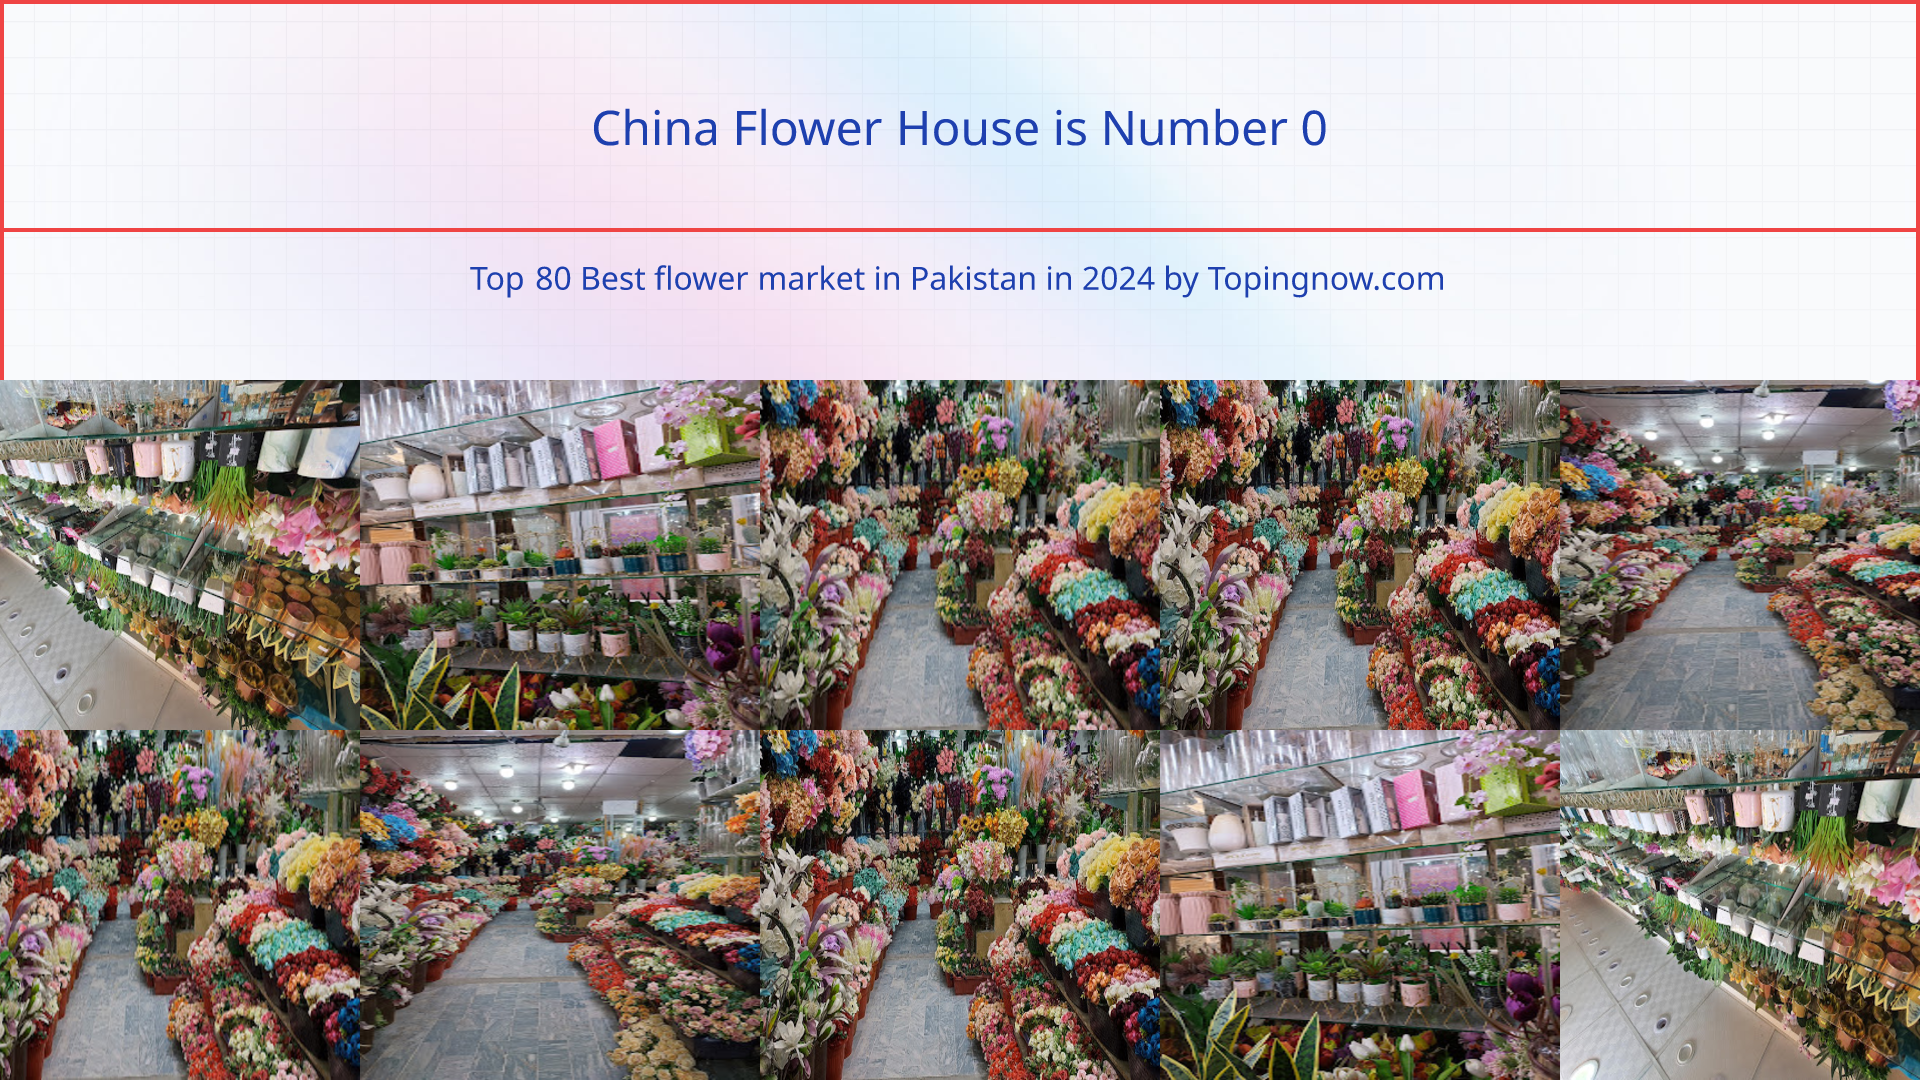 China Flower House: Top 80 Best flower market in Pakistan in 2024